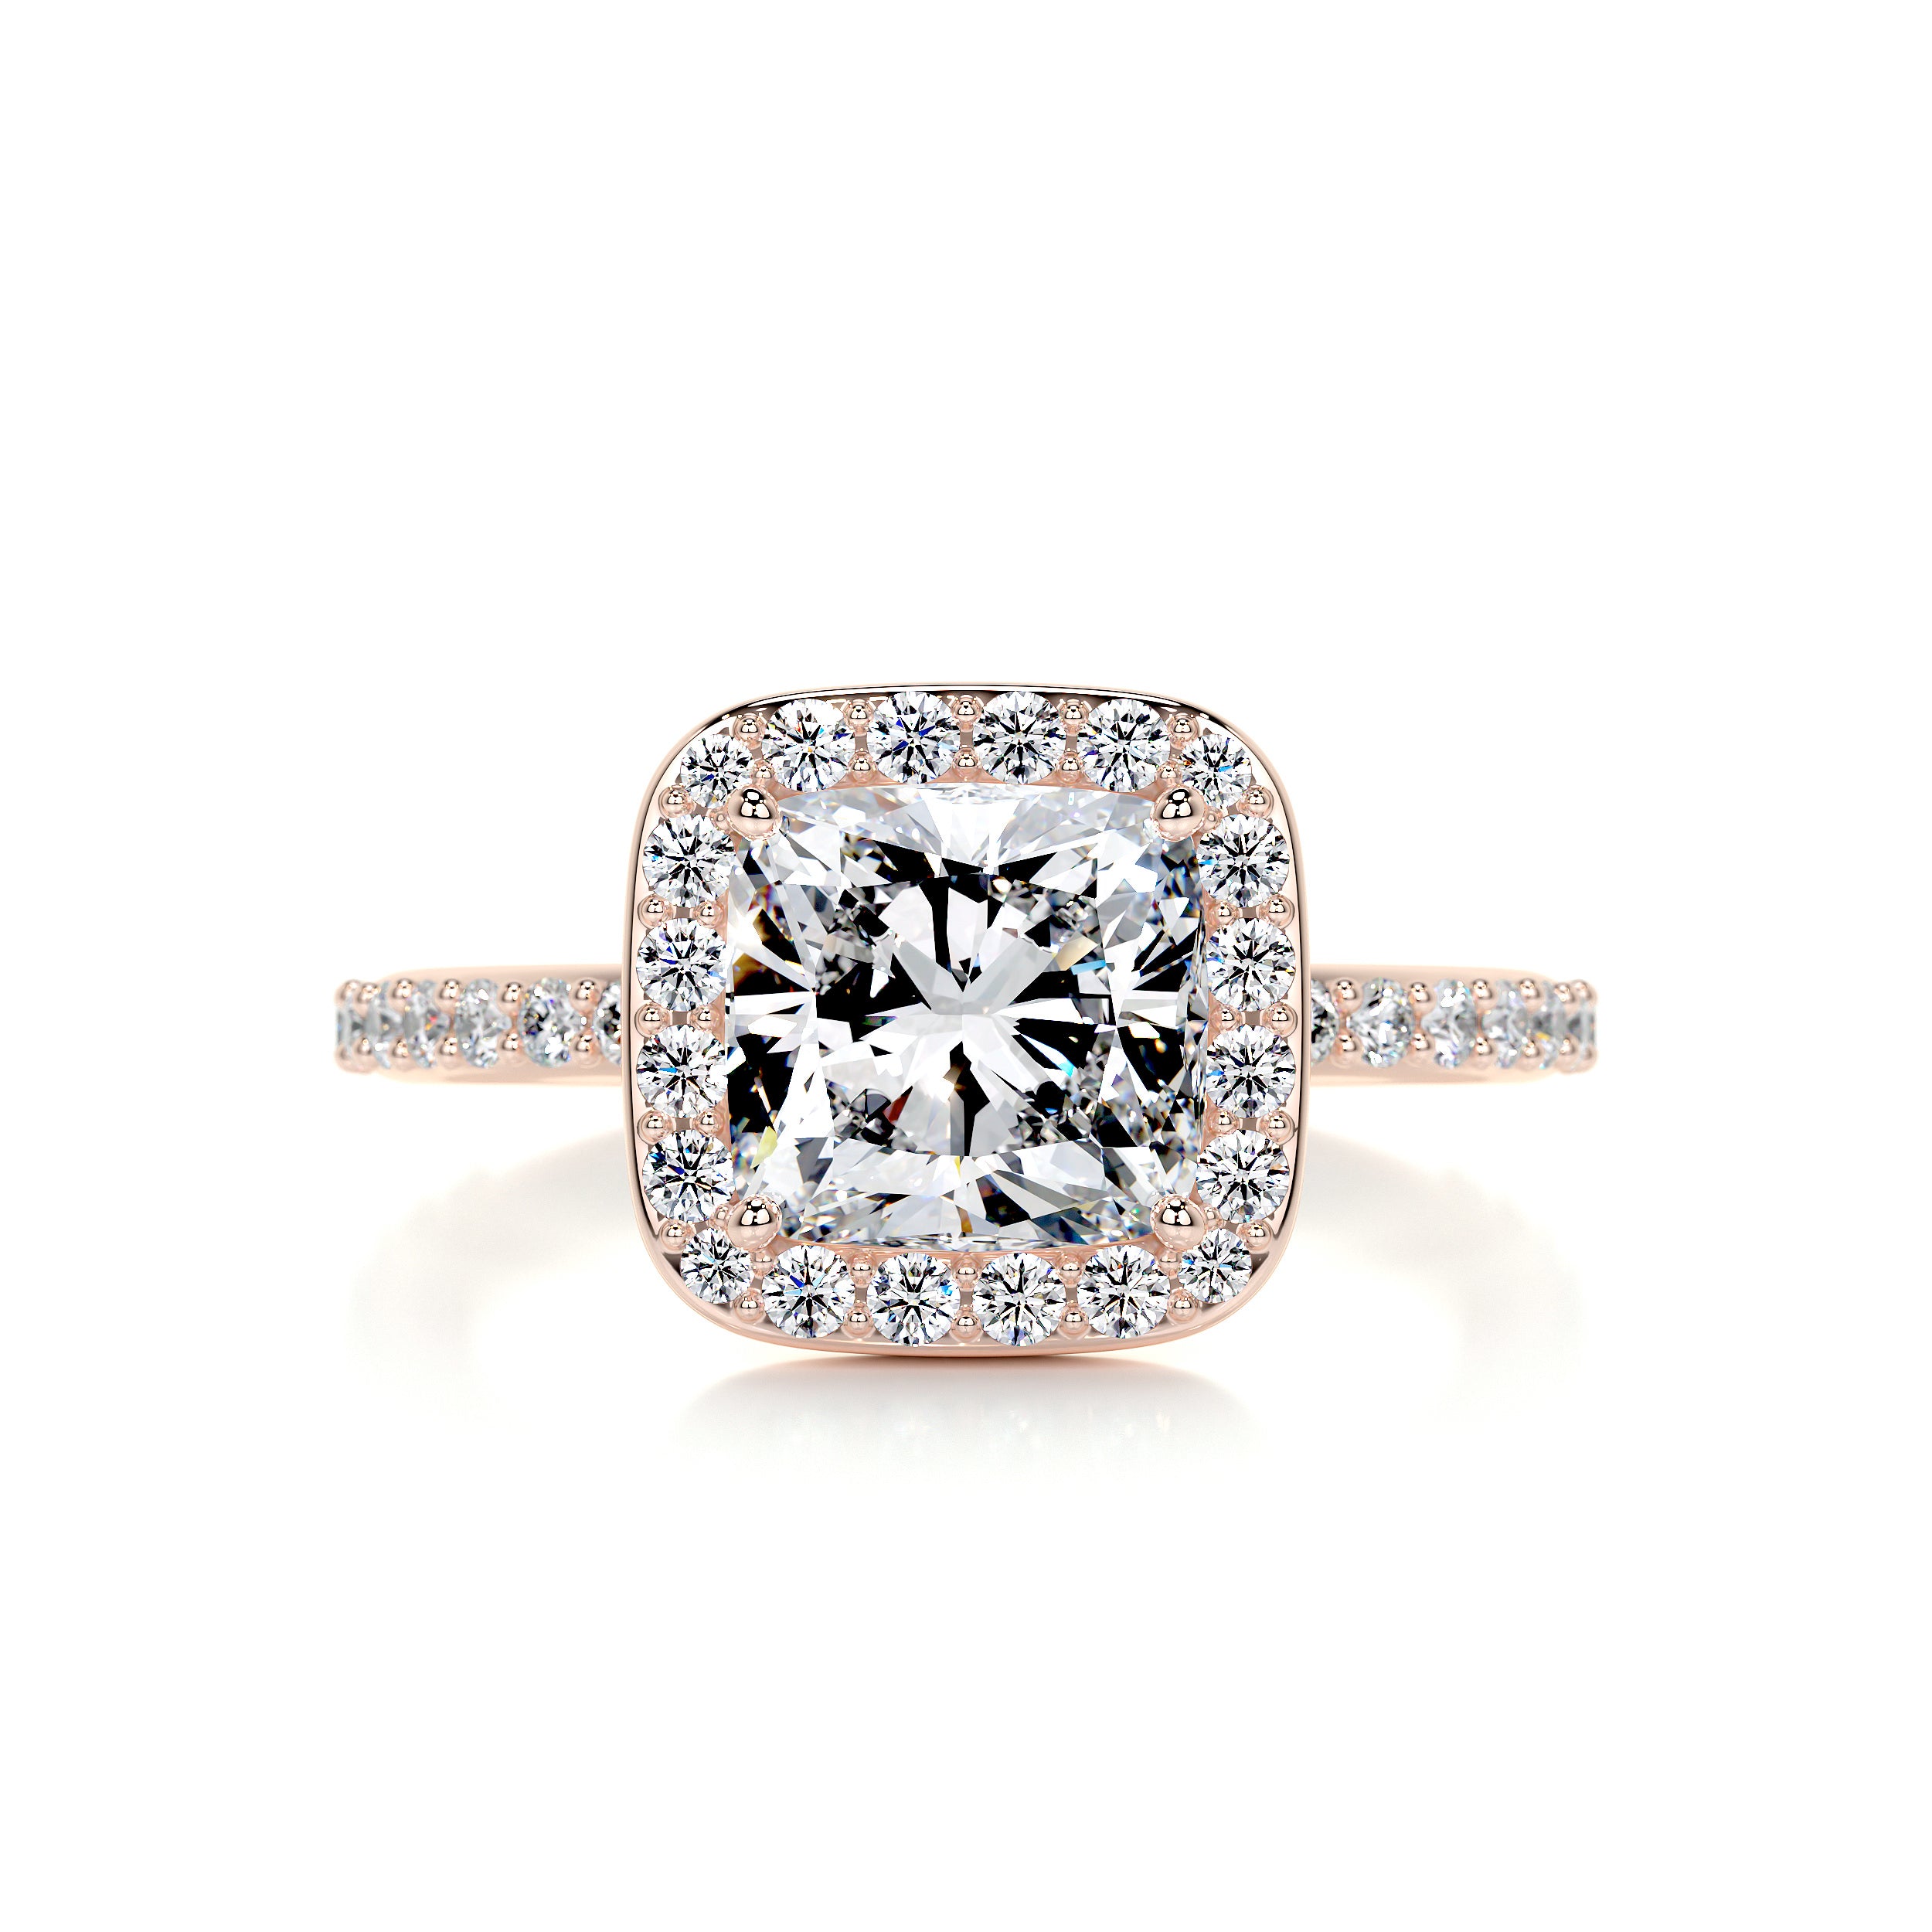 Paula Diamond Engagement Ring -14K Rose Gold